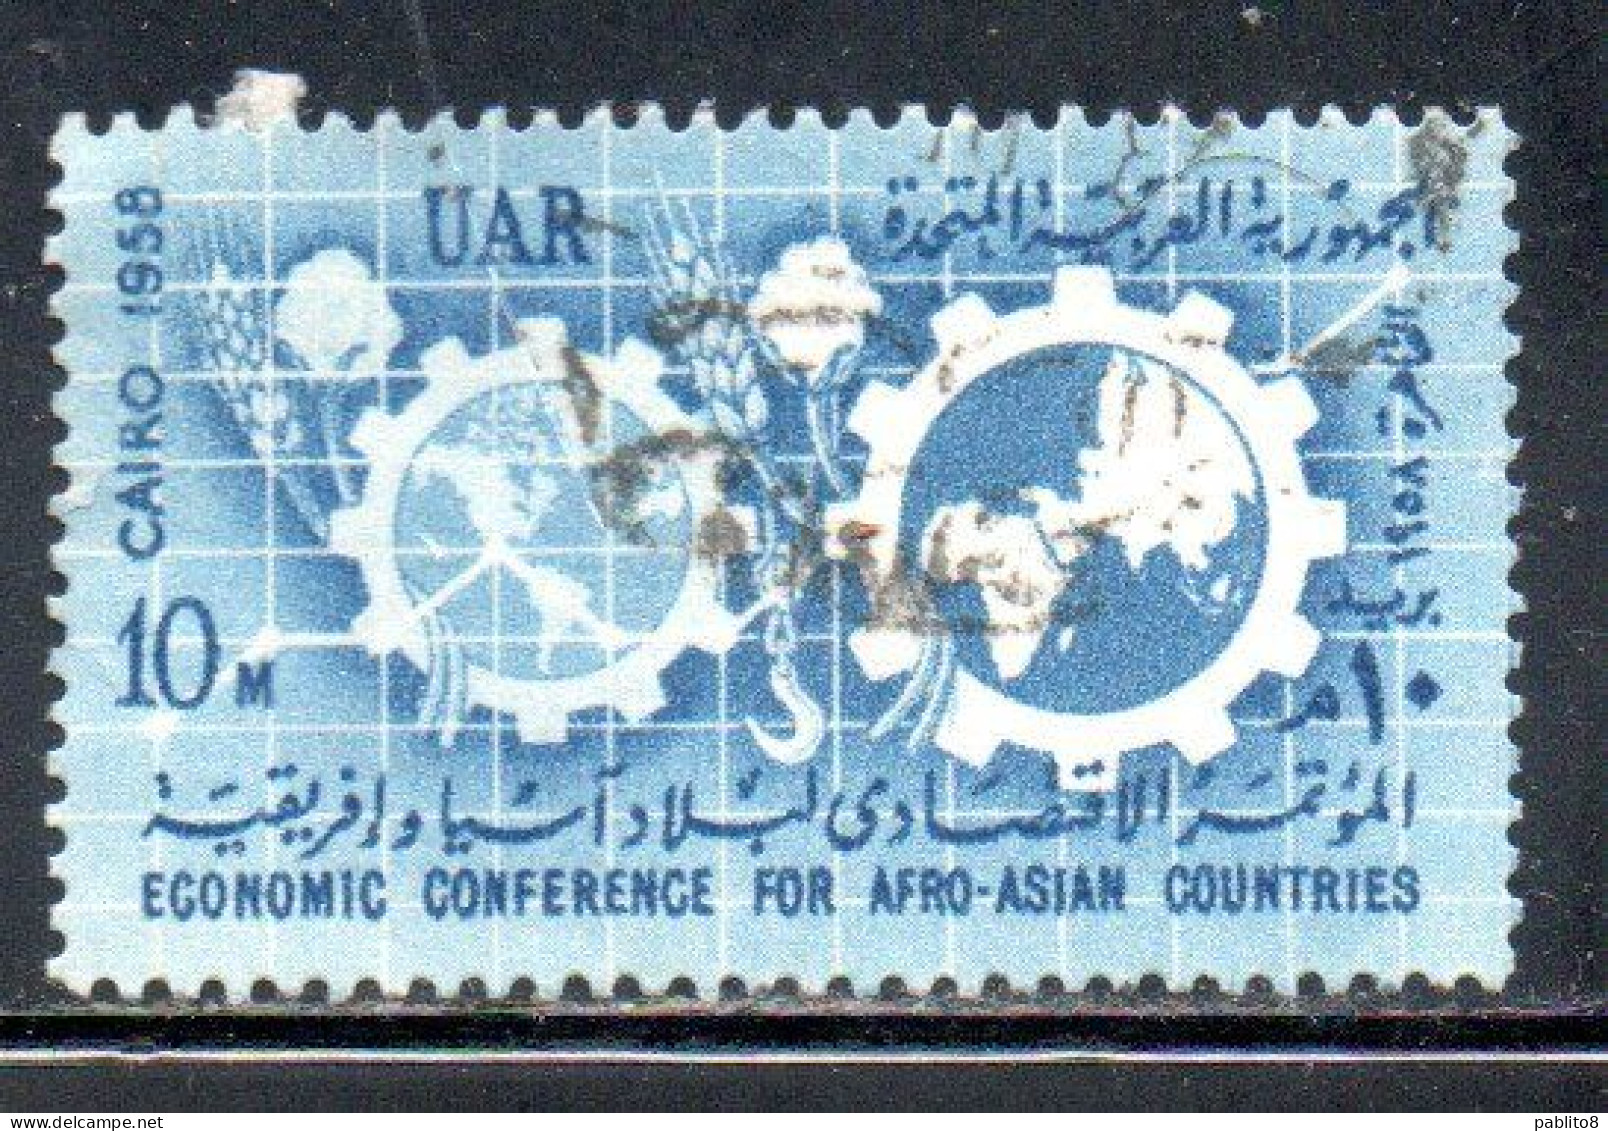 UAR EGYPT EGITTO 1958 ECONOMIC CONFERENCE OF AFRO-ASIAN COUNTRIES CAIROMAPS AND COGWHEELS 10m USED USATO OBLITERE' - Oblitérés